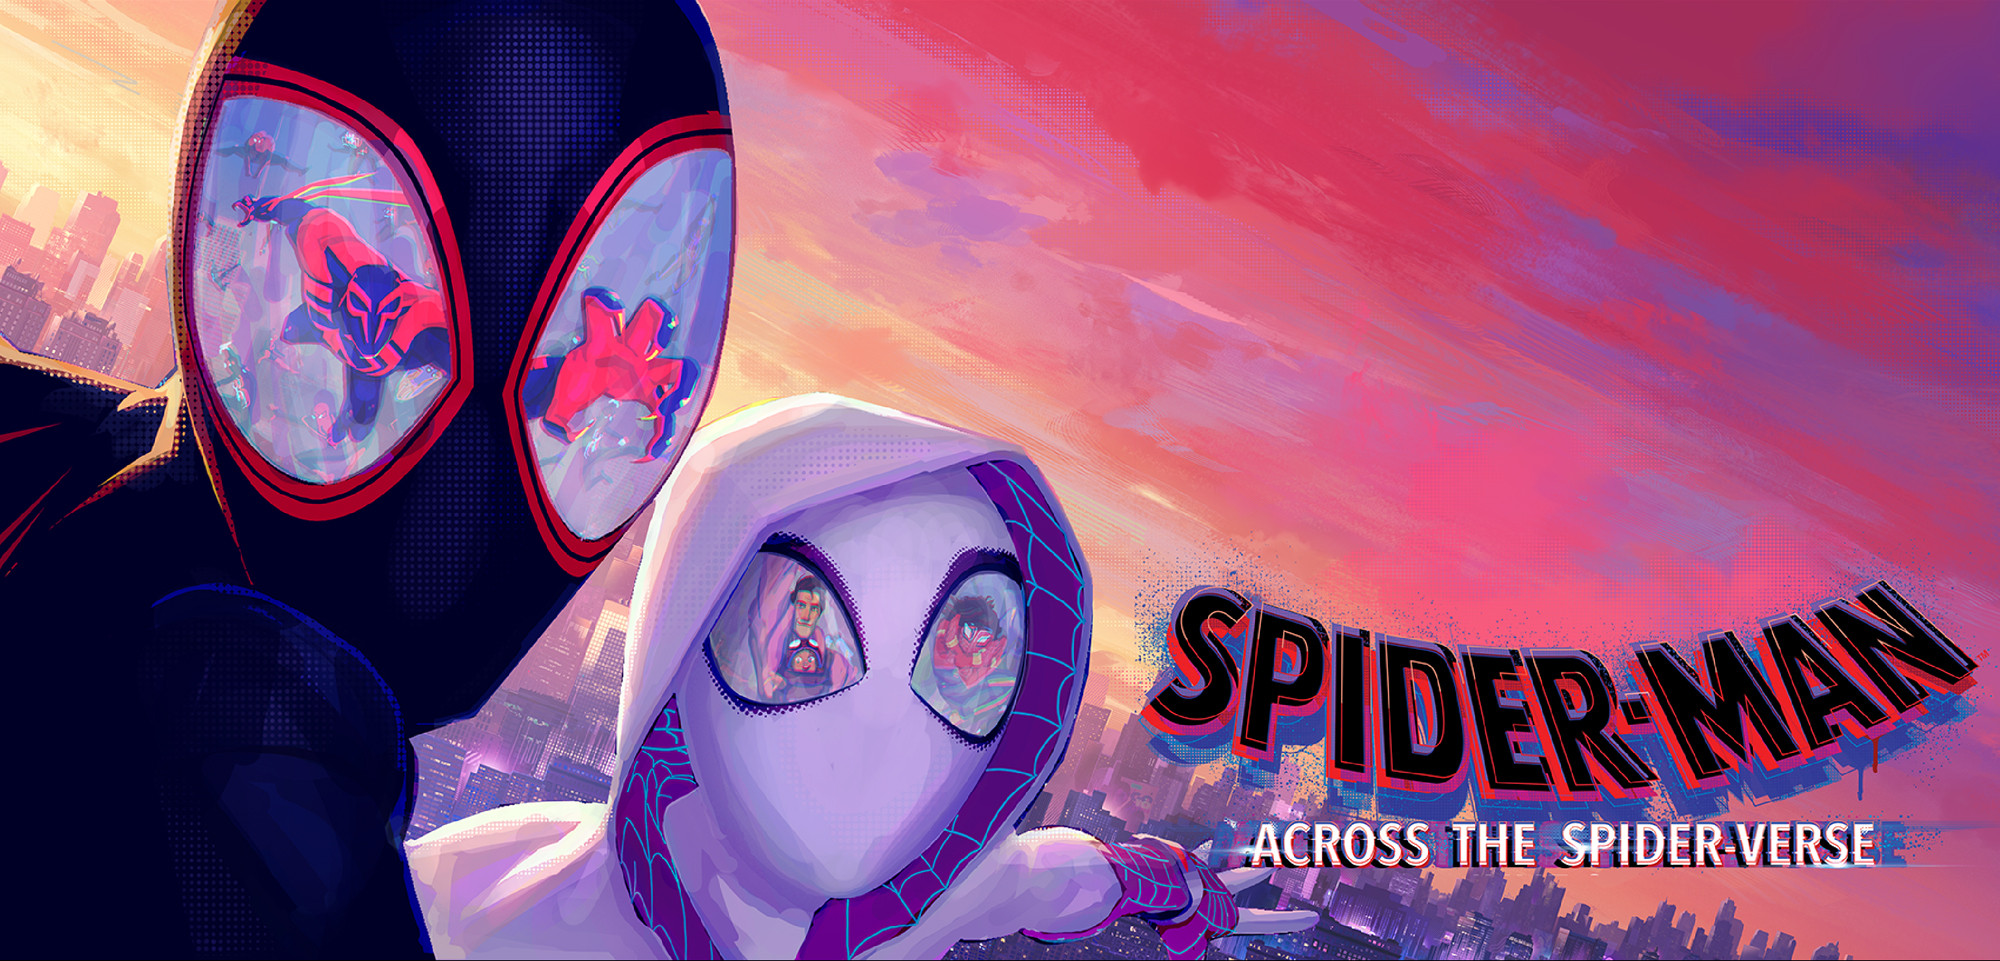 'Spider Man' : Across the Spider-Verse
Movie Poster